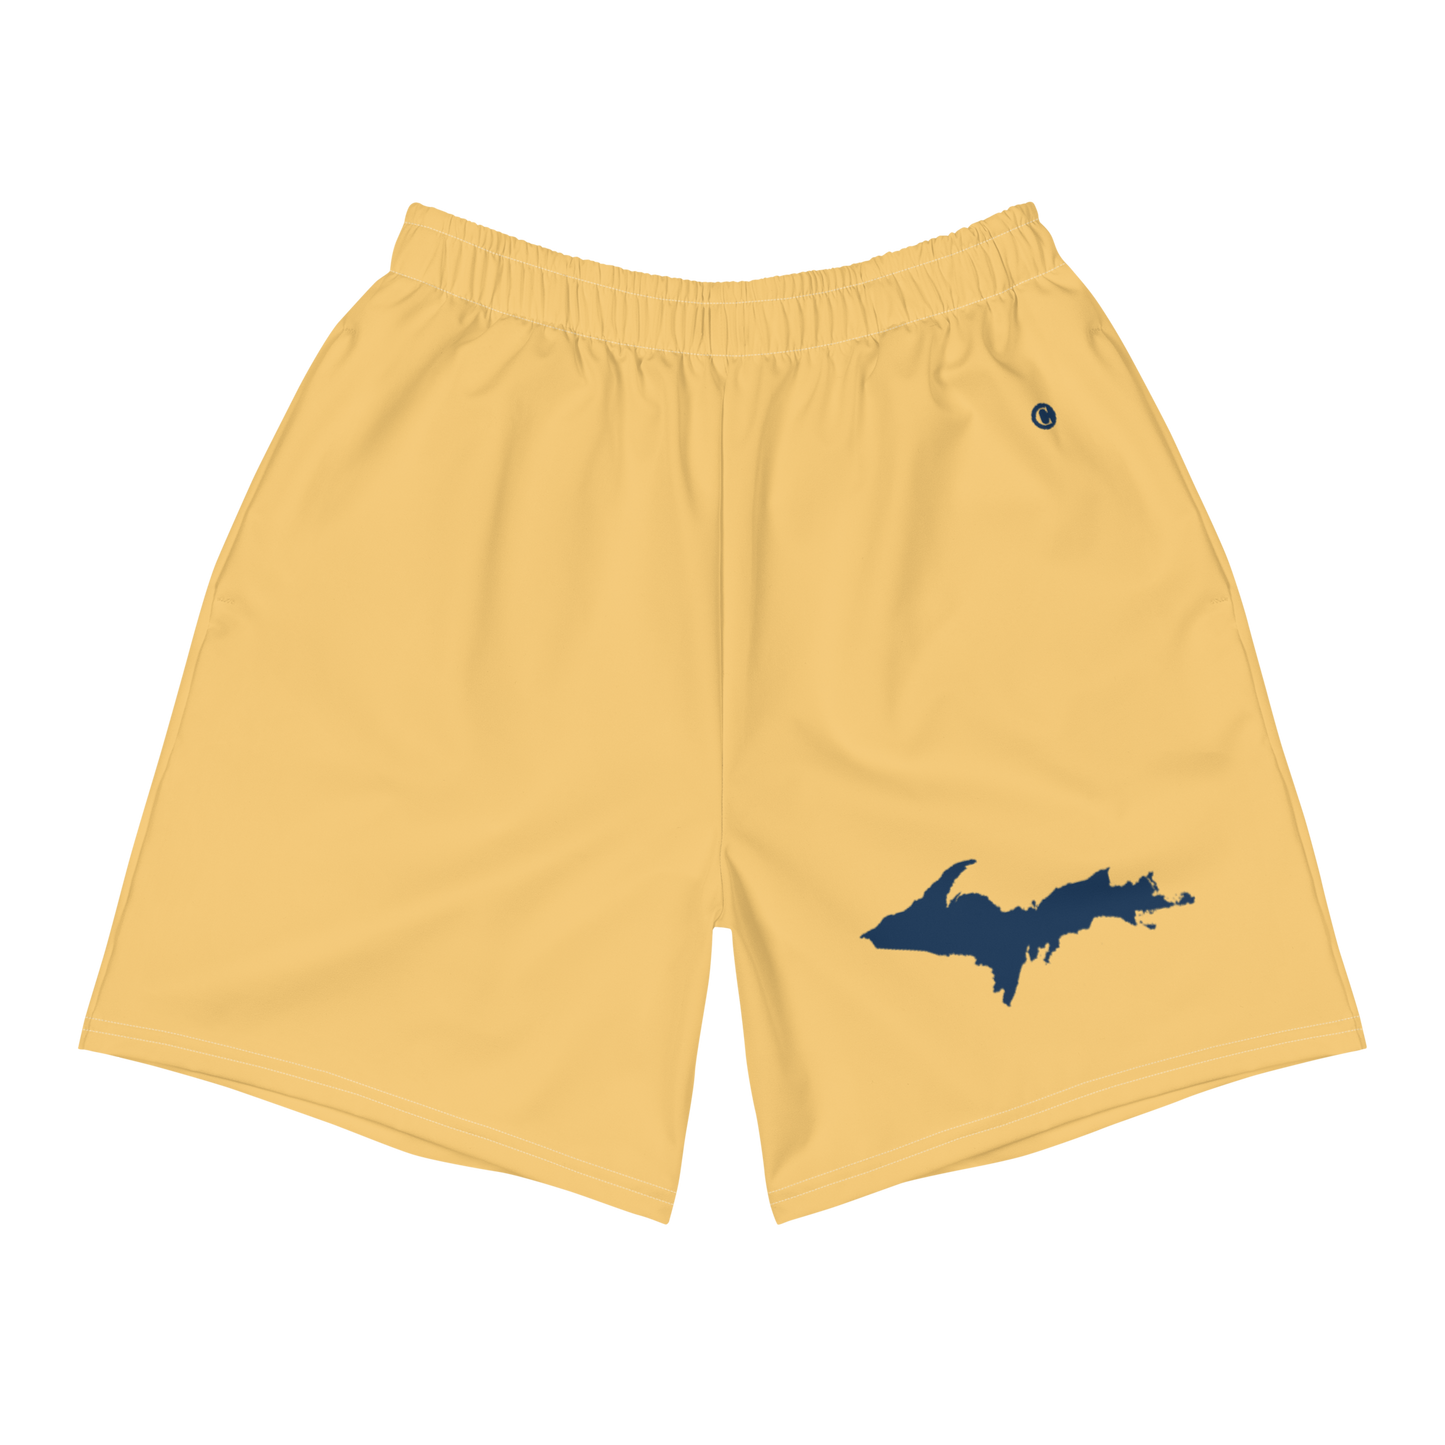 Michigan Upper Peninsula Athletic Shorts (w/ UP USA Flag) | Men's - Citrine